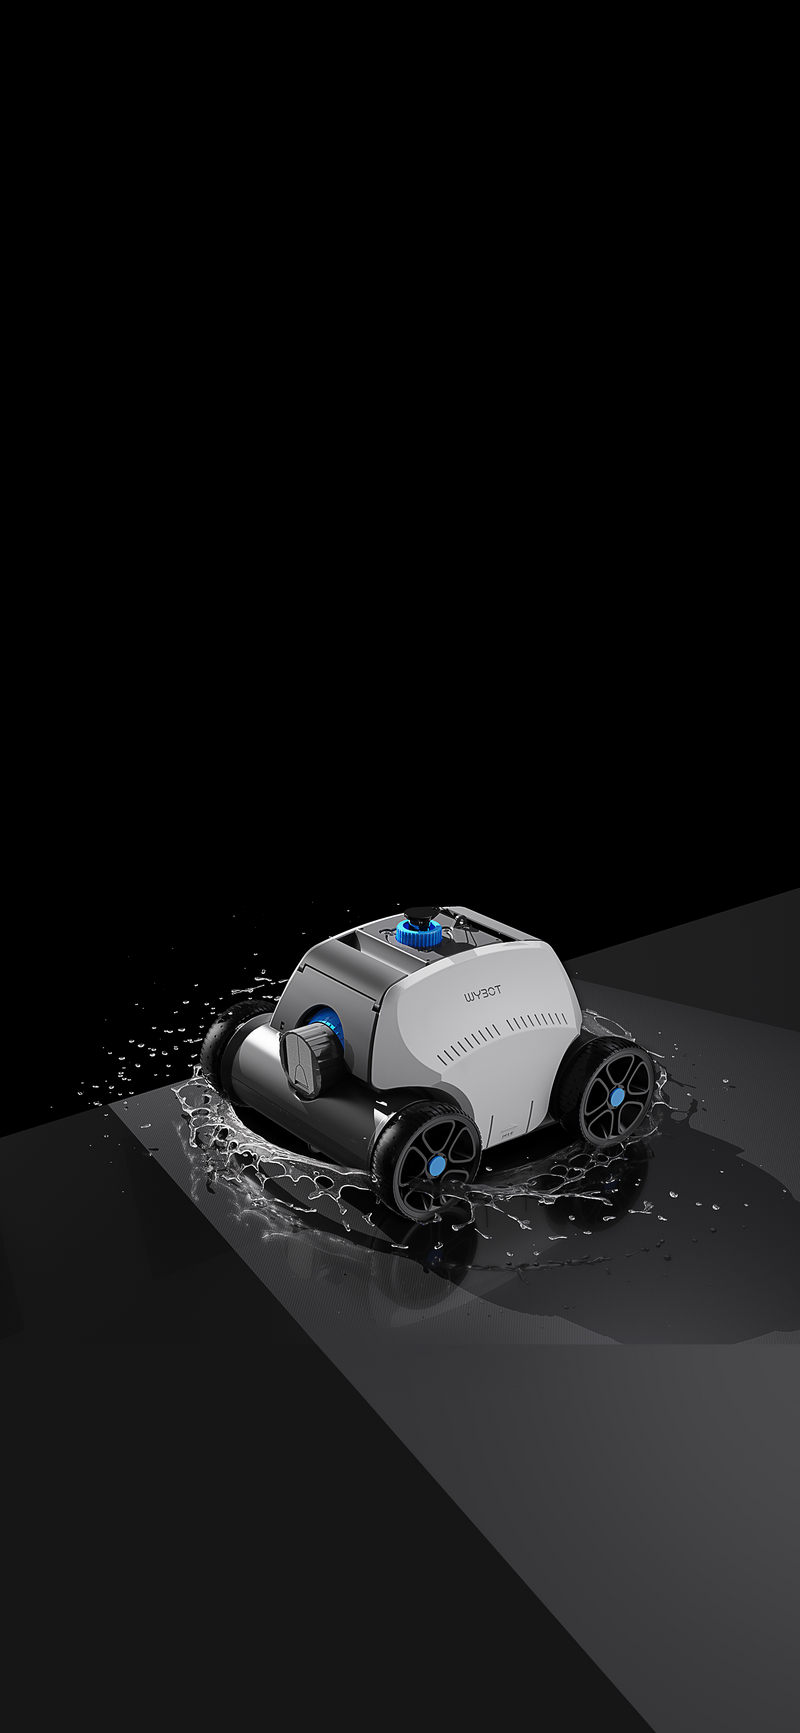 Brightbot 6000 Robotic pool cleaner - ATECPOOL